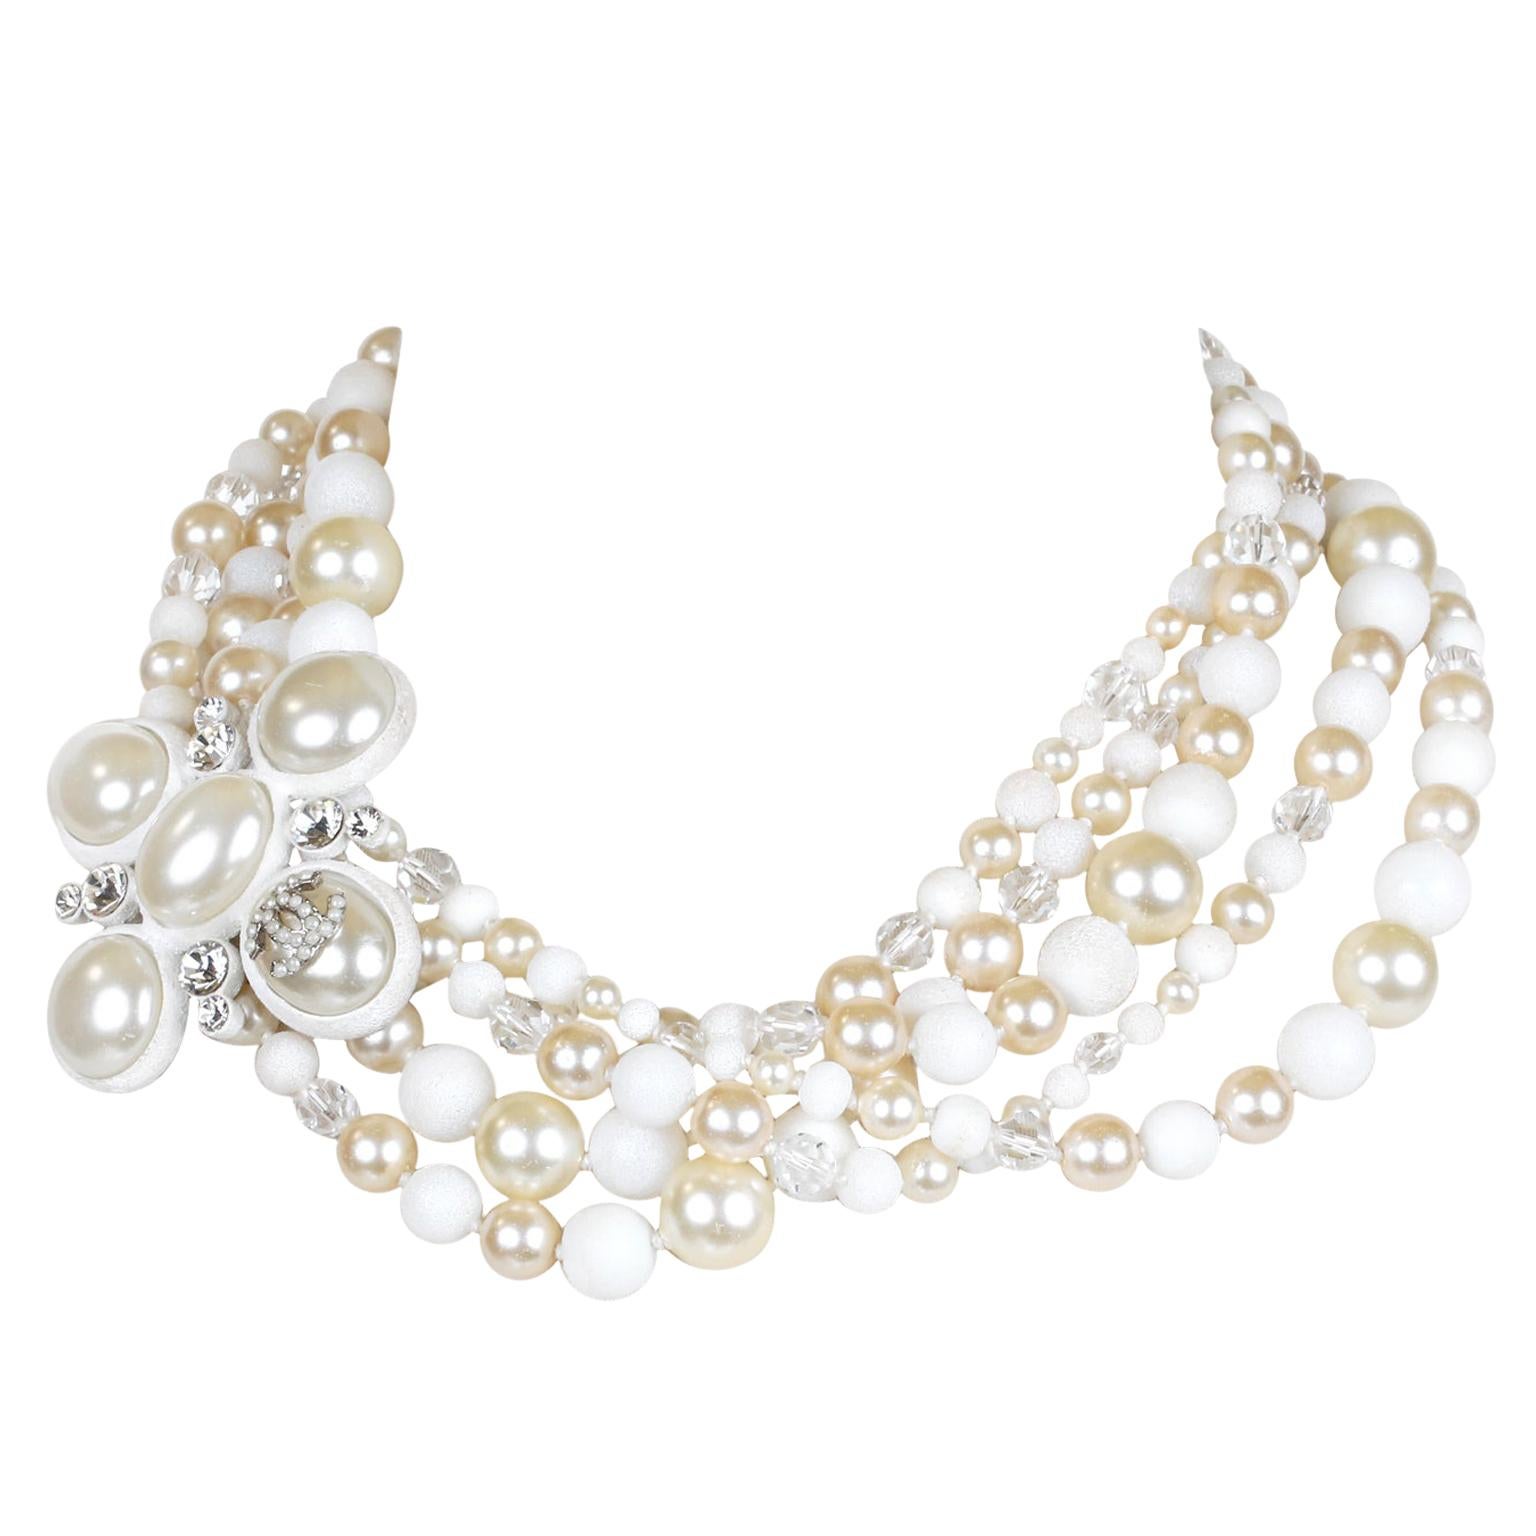 Choker  Metal glass pearls  diamantés gold beige  crystal  Fashion   CHANEL